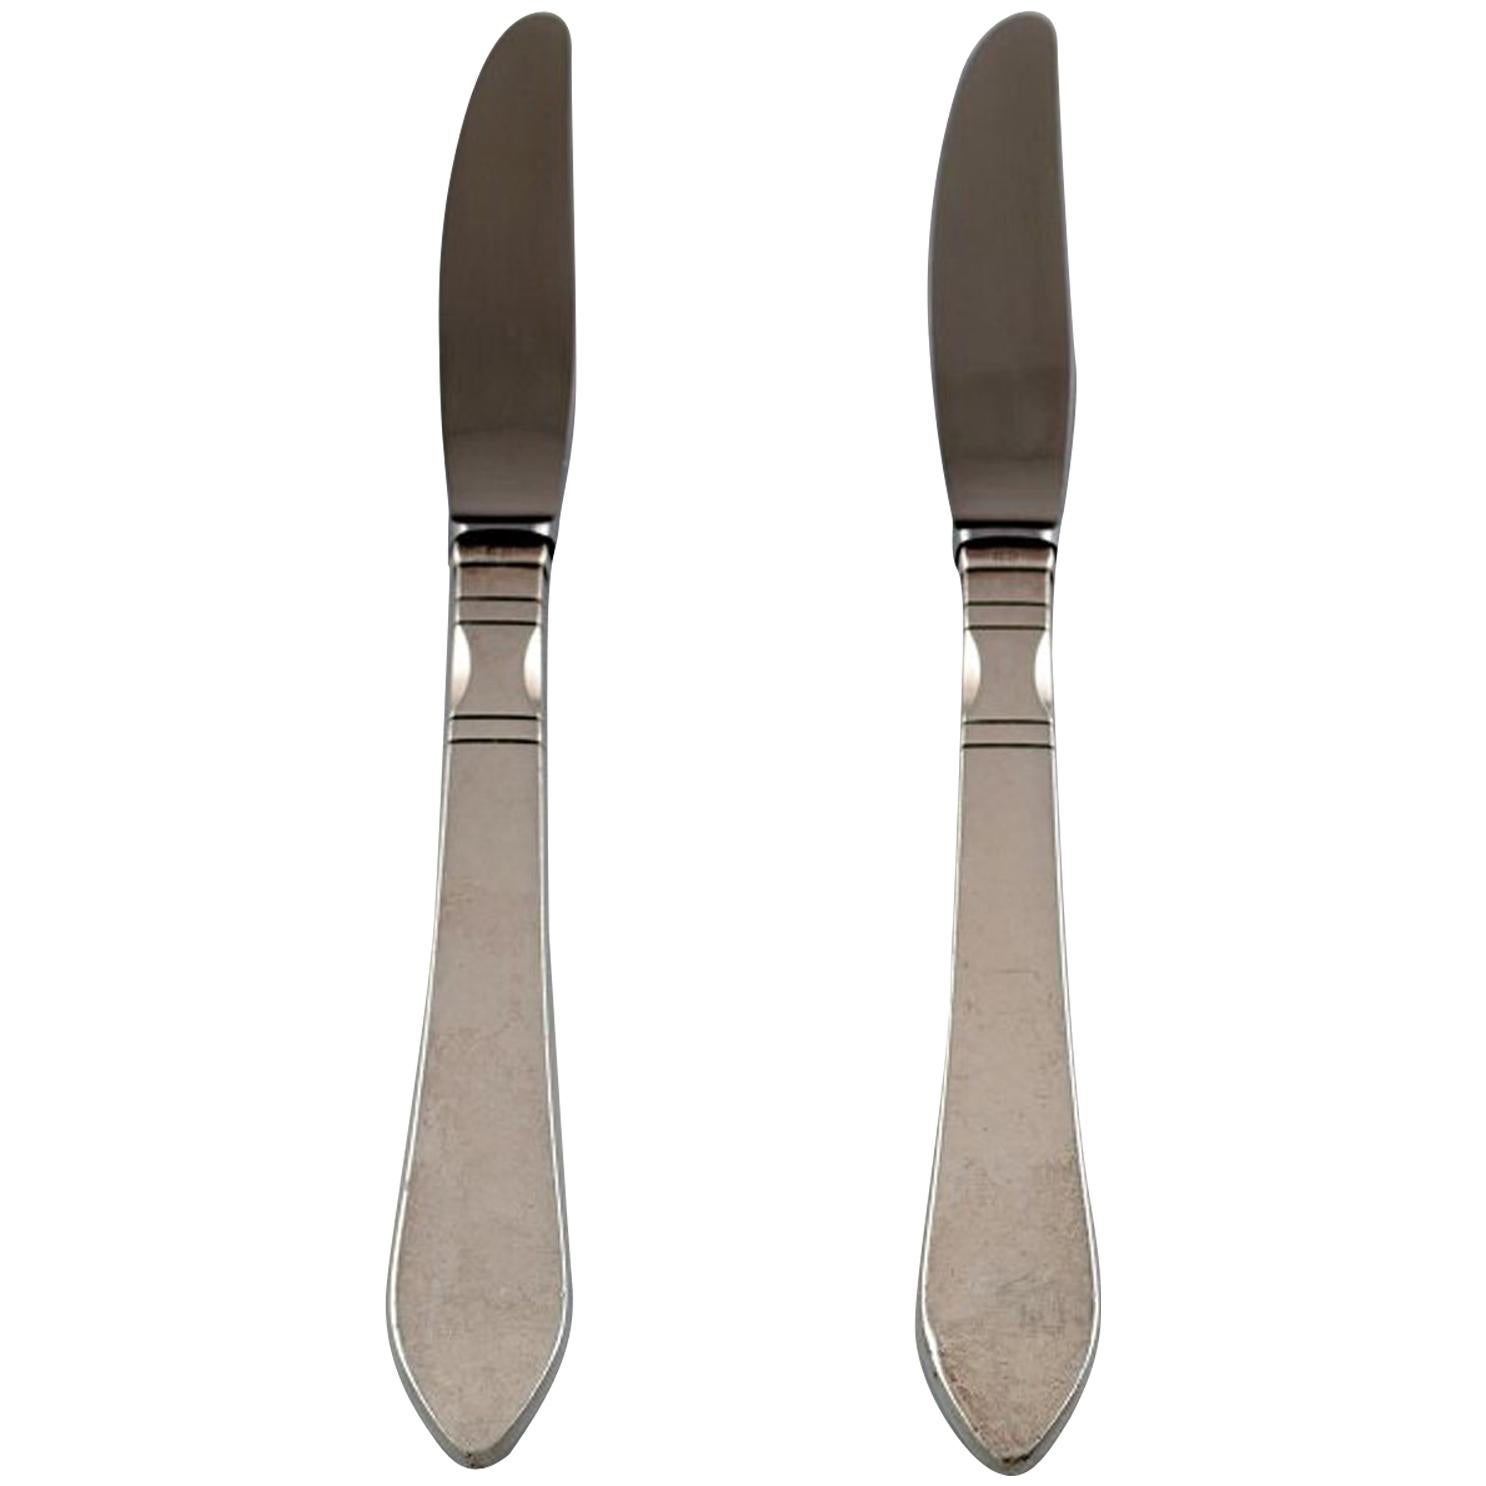 Georg Jensen. Continental, Two Dinner Knife, Silverware, Hand-Hammered